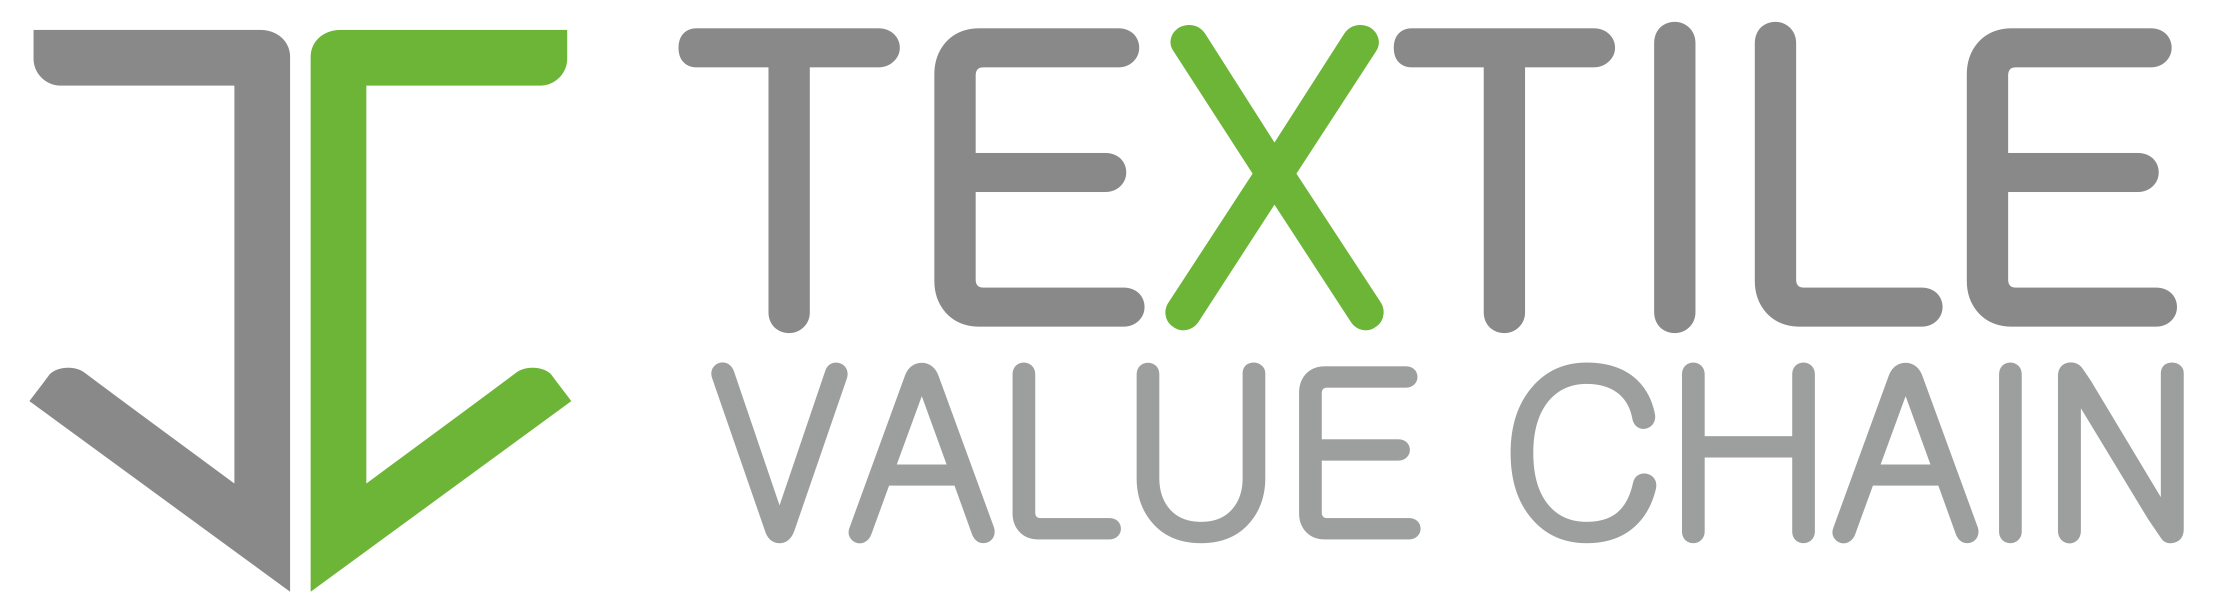 Textile value chain logo